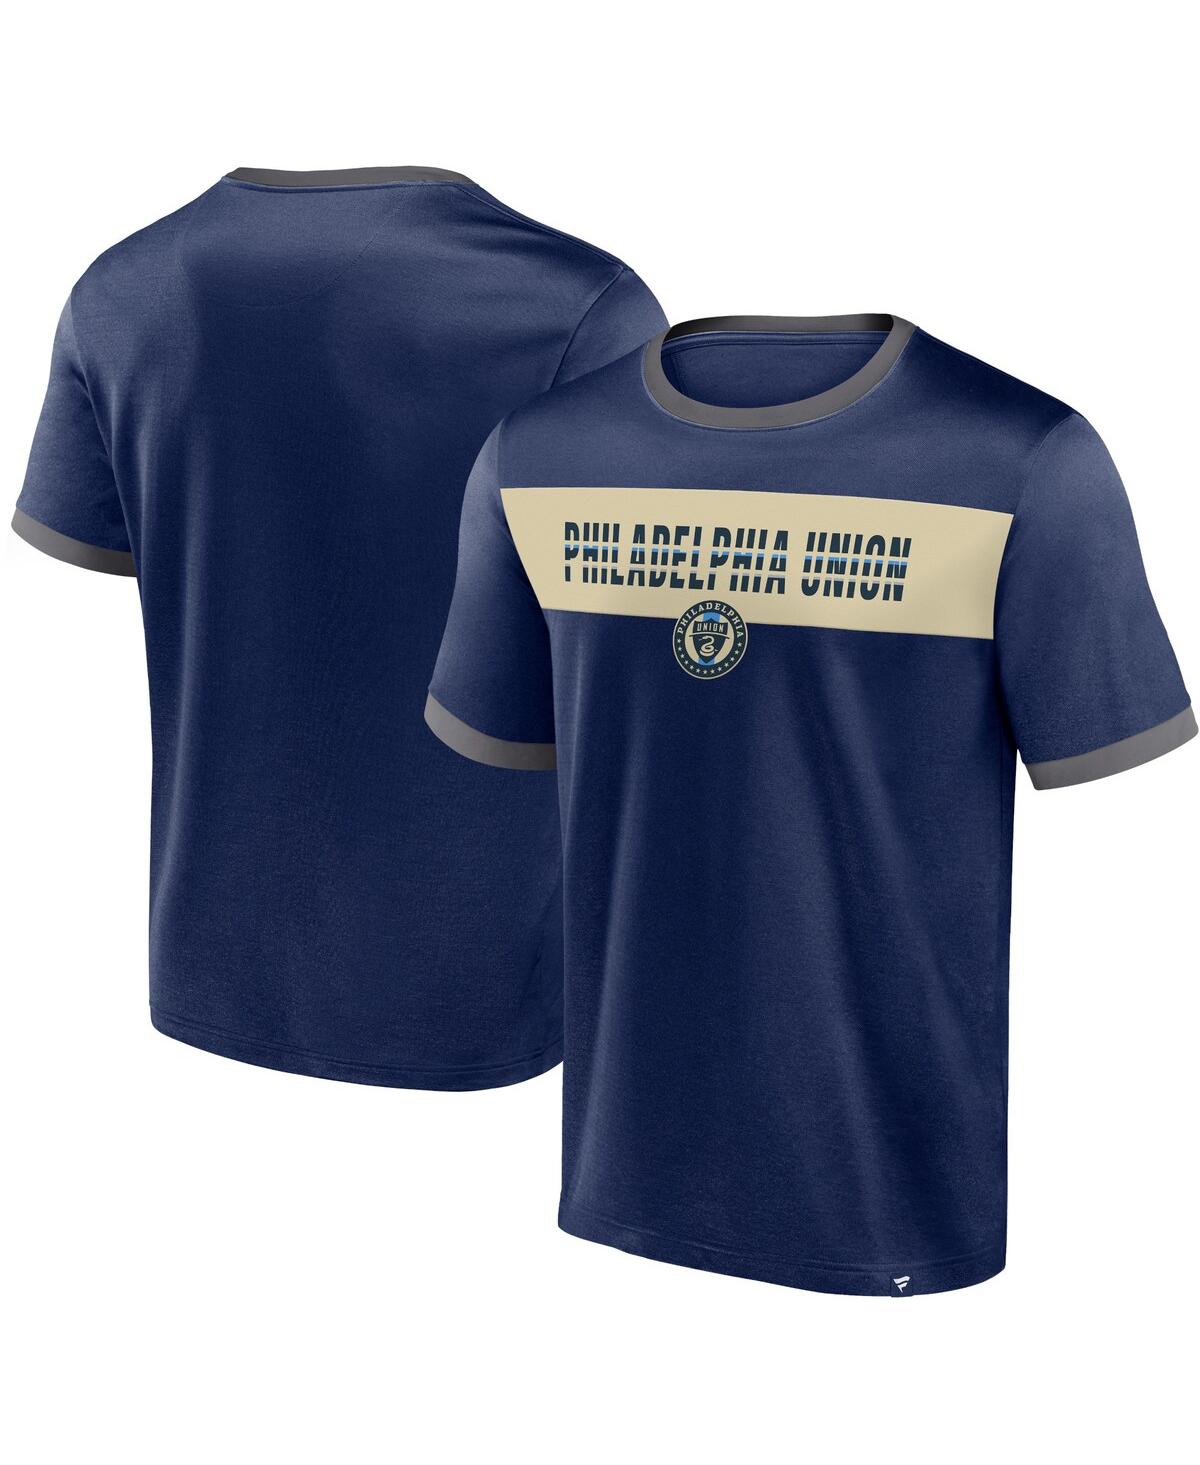 Men's Fanatics Navy Philadelphia Union Advantages T-shirt - Navy